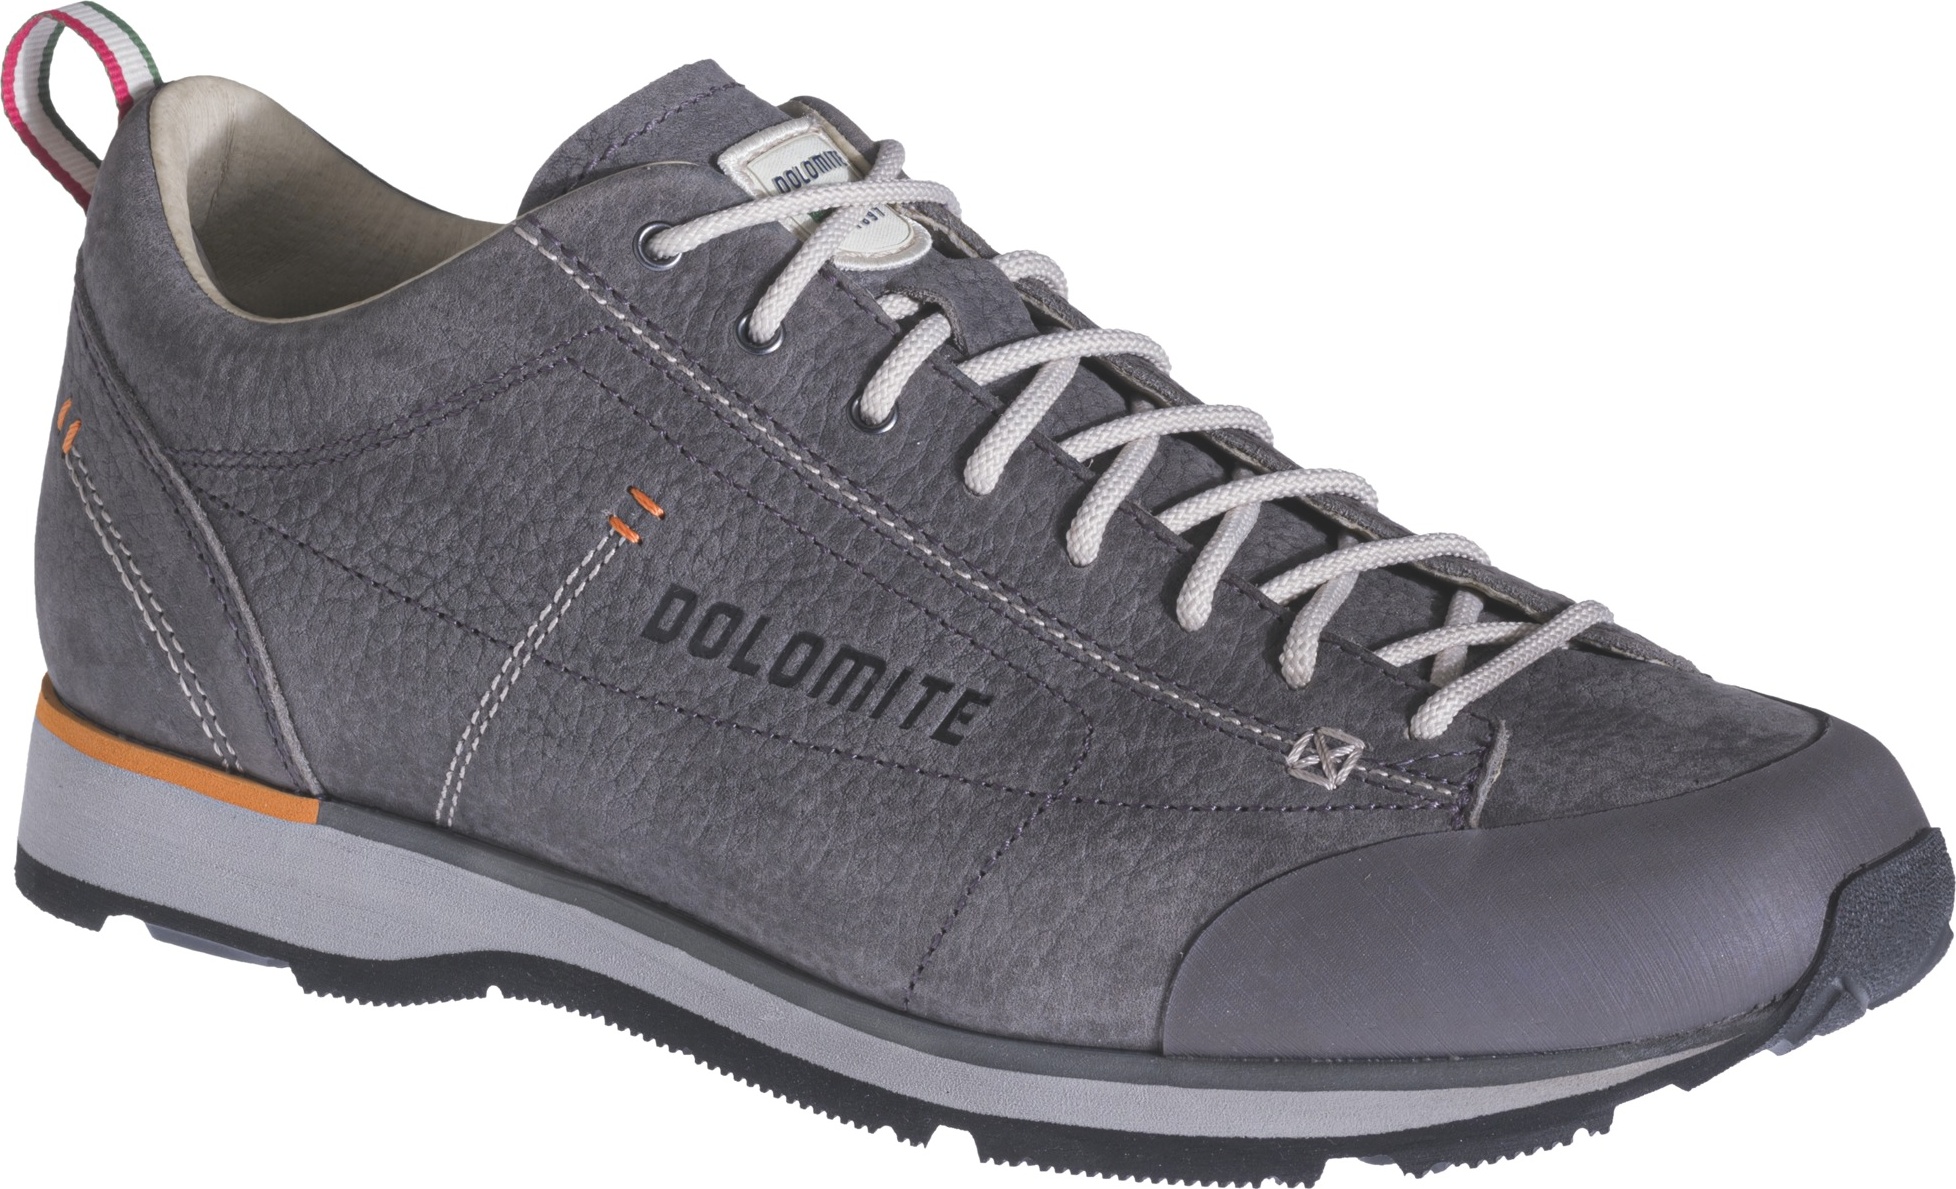 Ботинки Dolomite 54 Low Lt Winter, grey, 10 UK